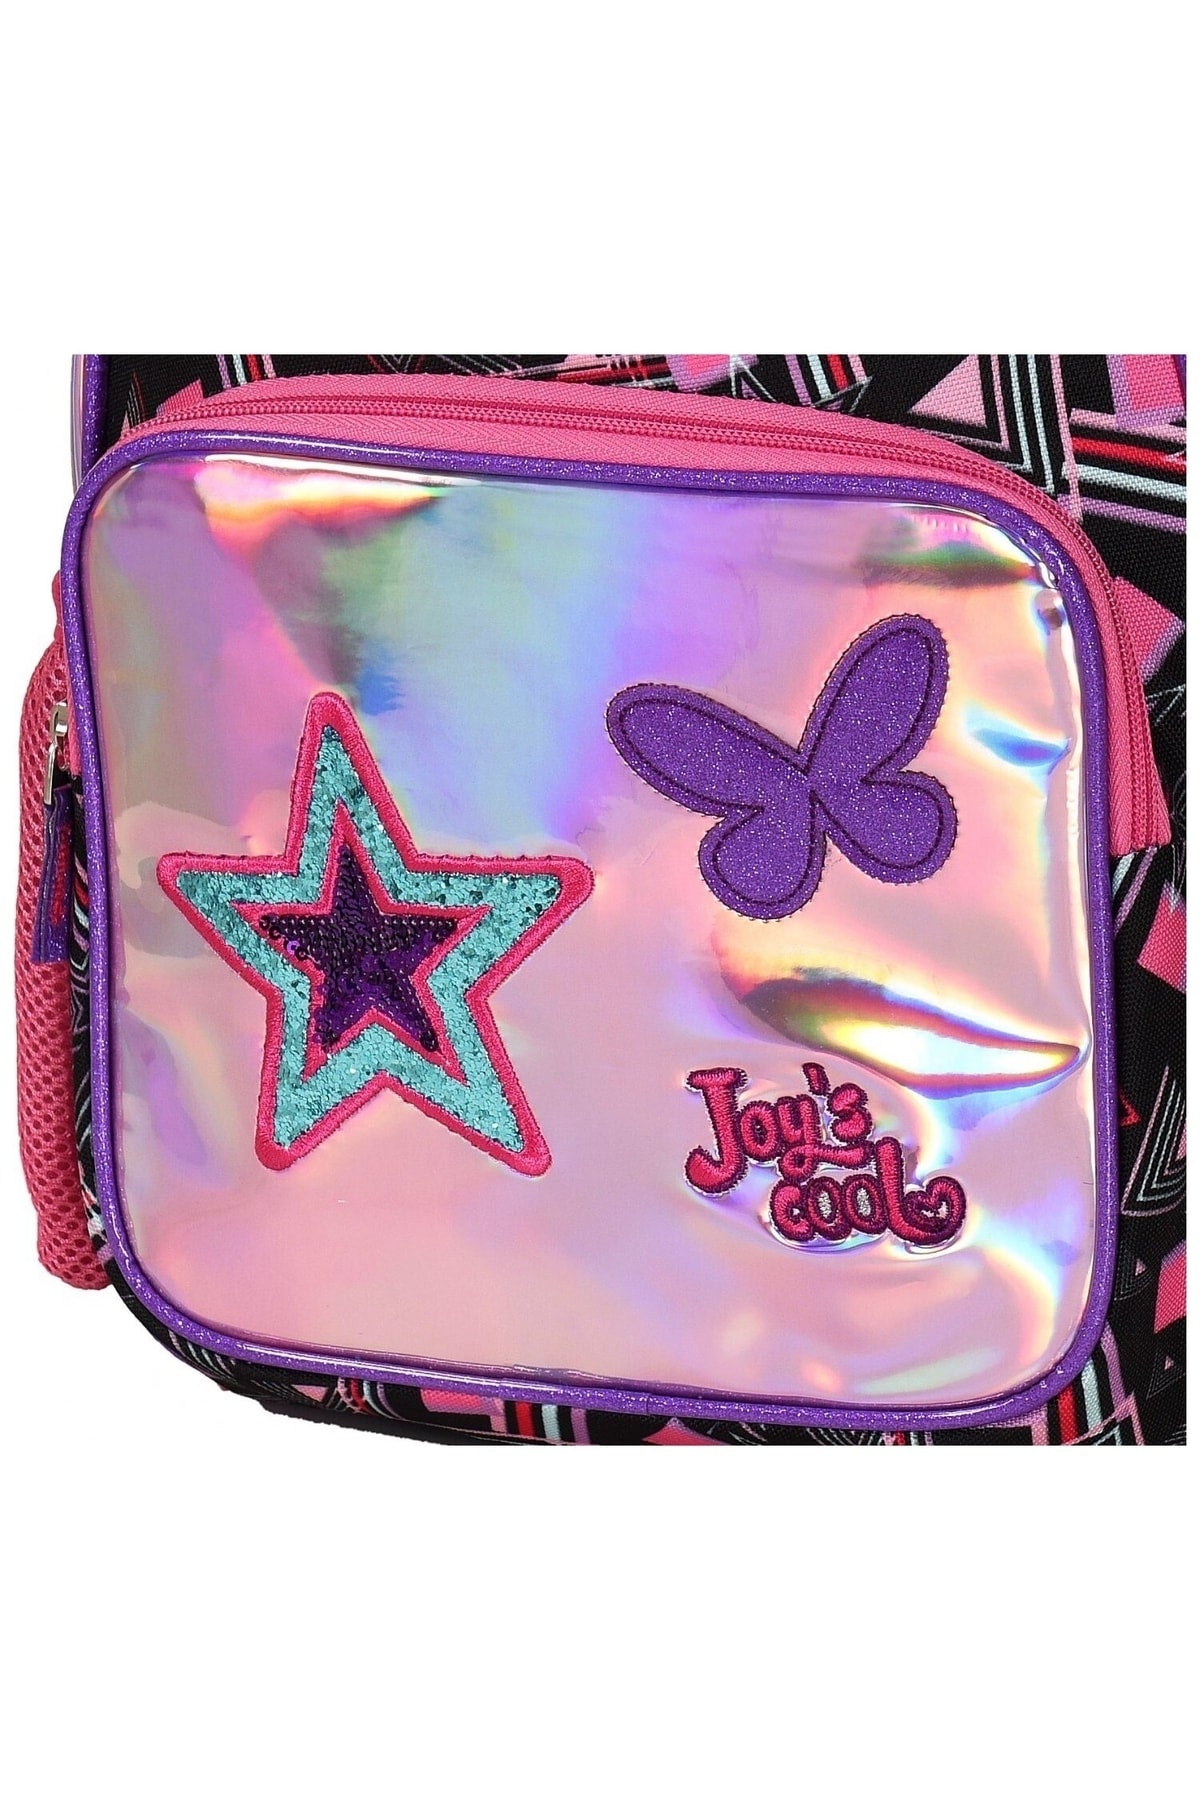 Joy's Cool Shiny Star Embroidered Pink Kindergarten Backpack